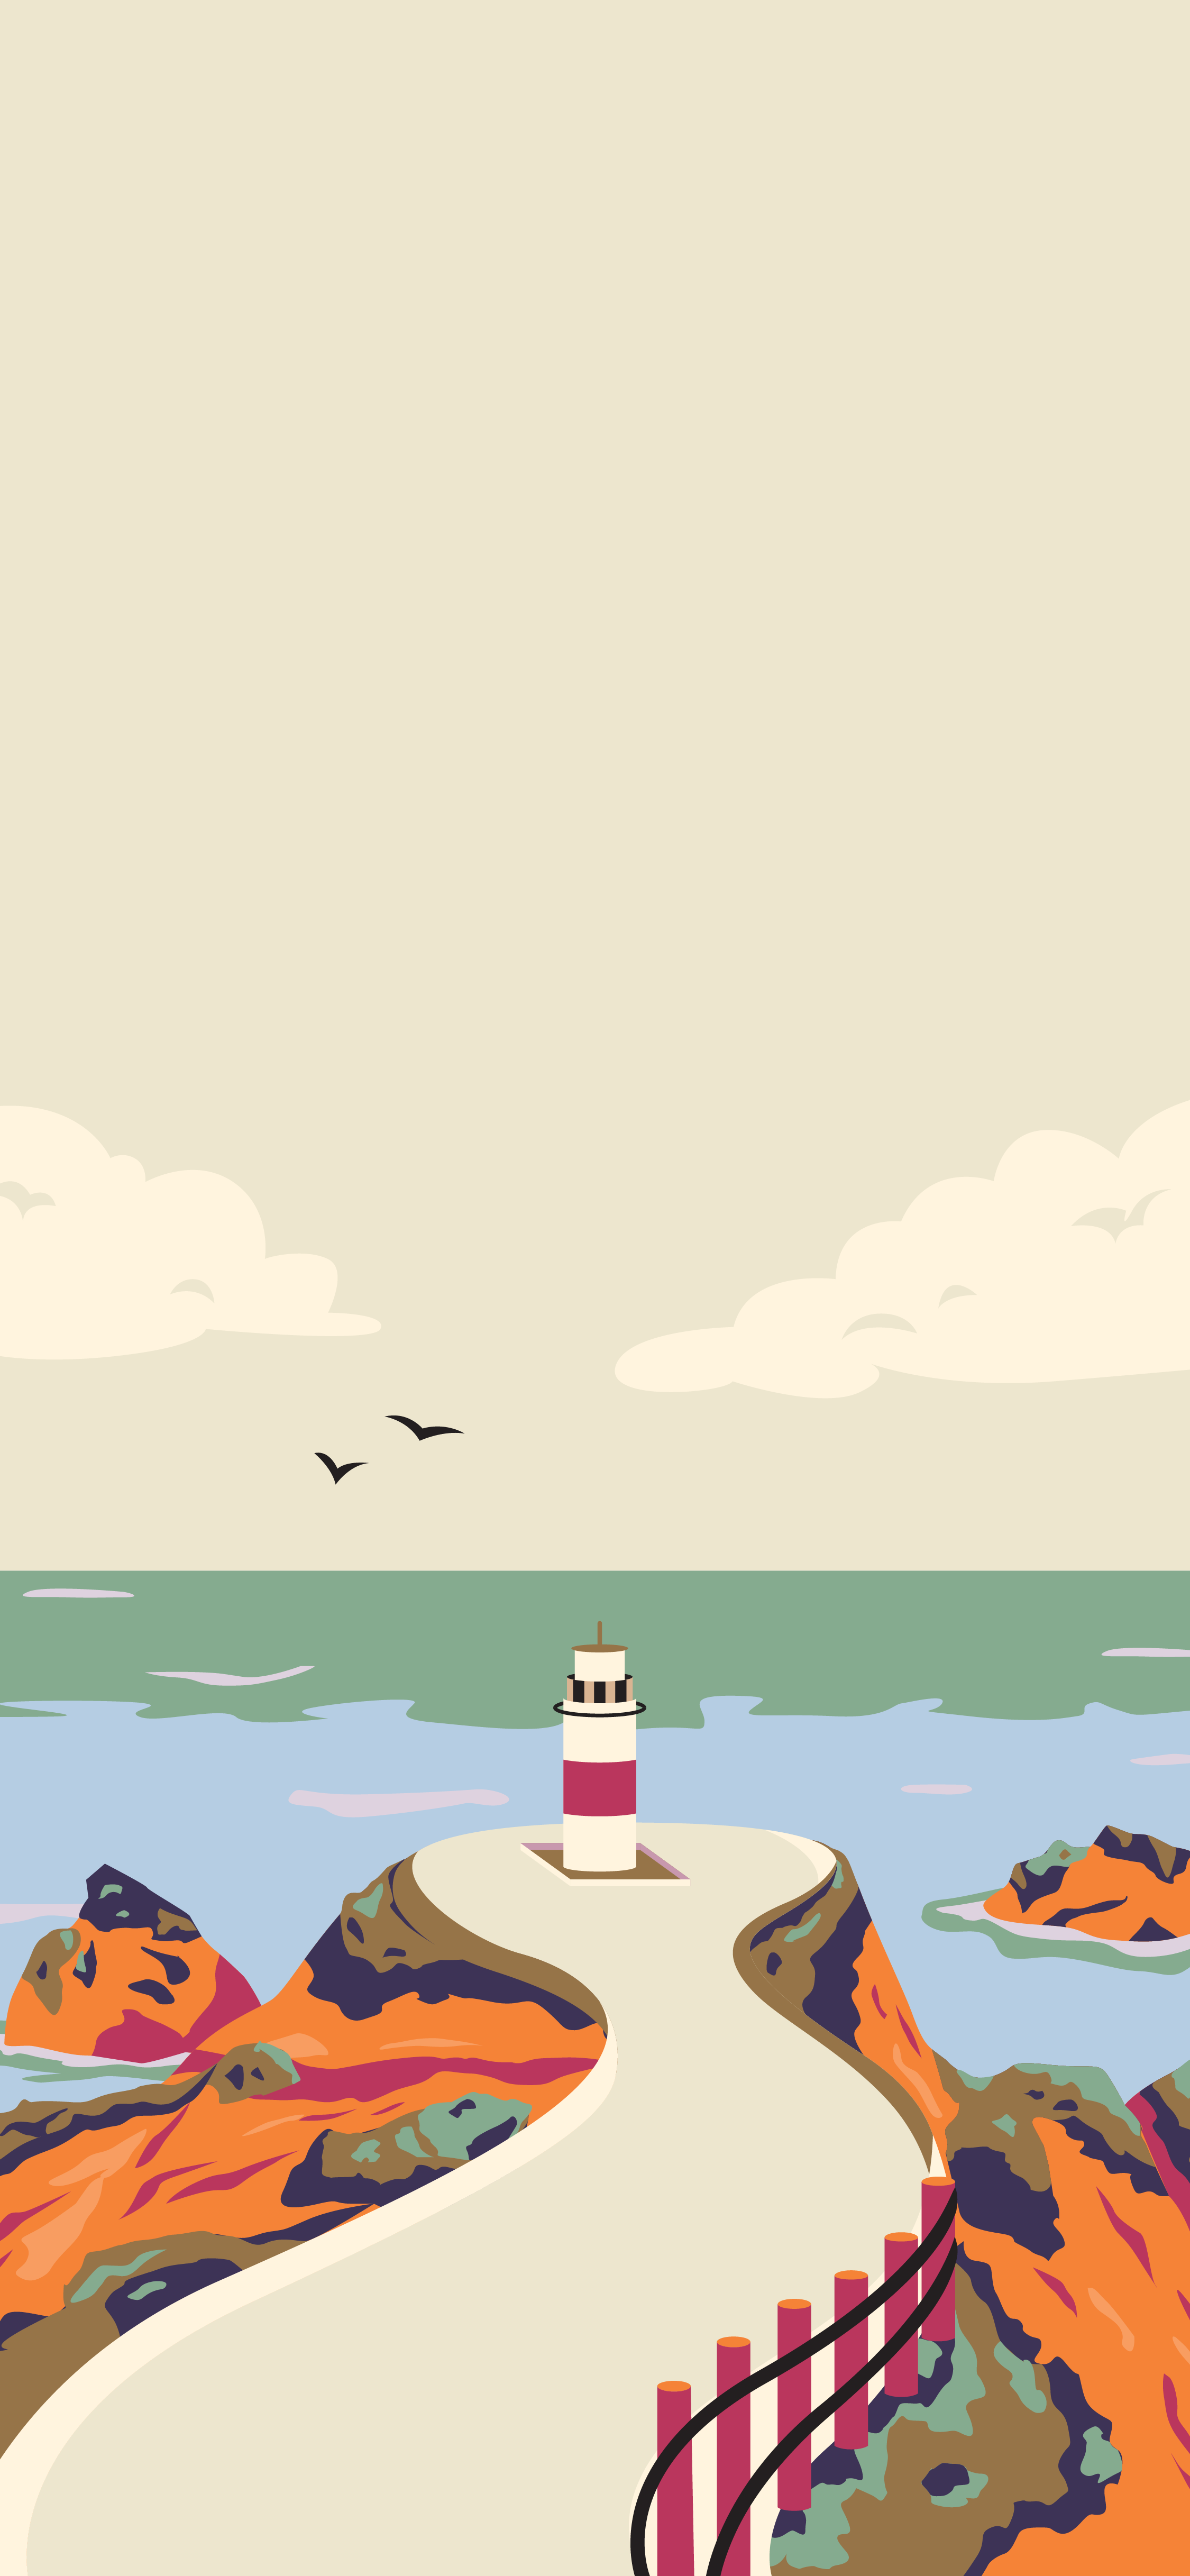 4K minimalist iPhone wallpaper - Lighthouse